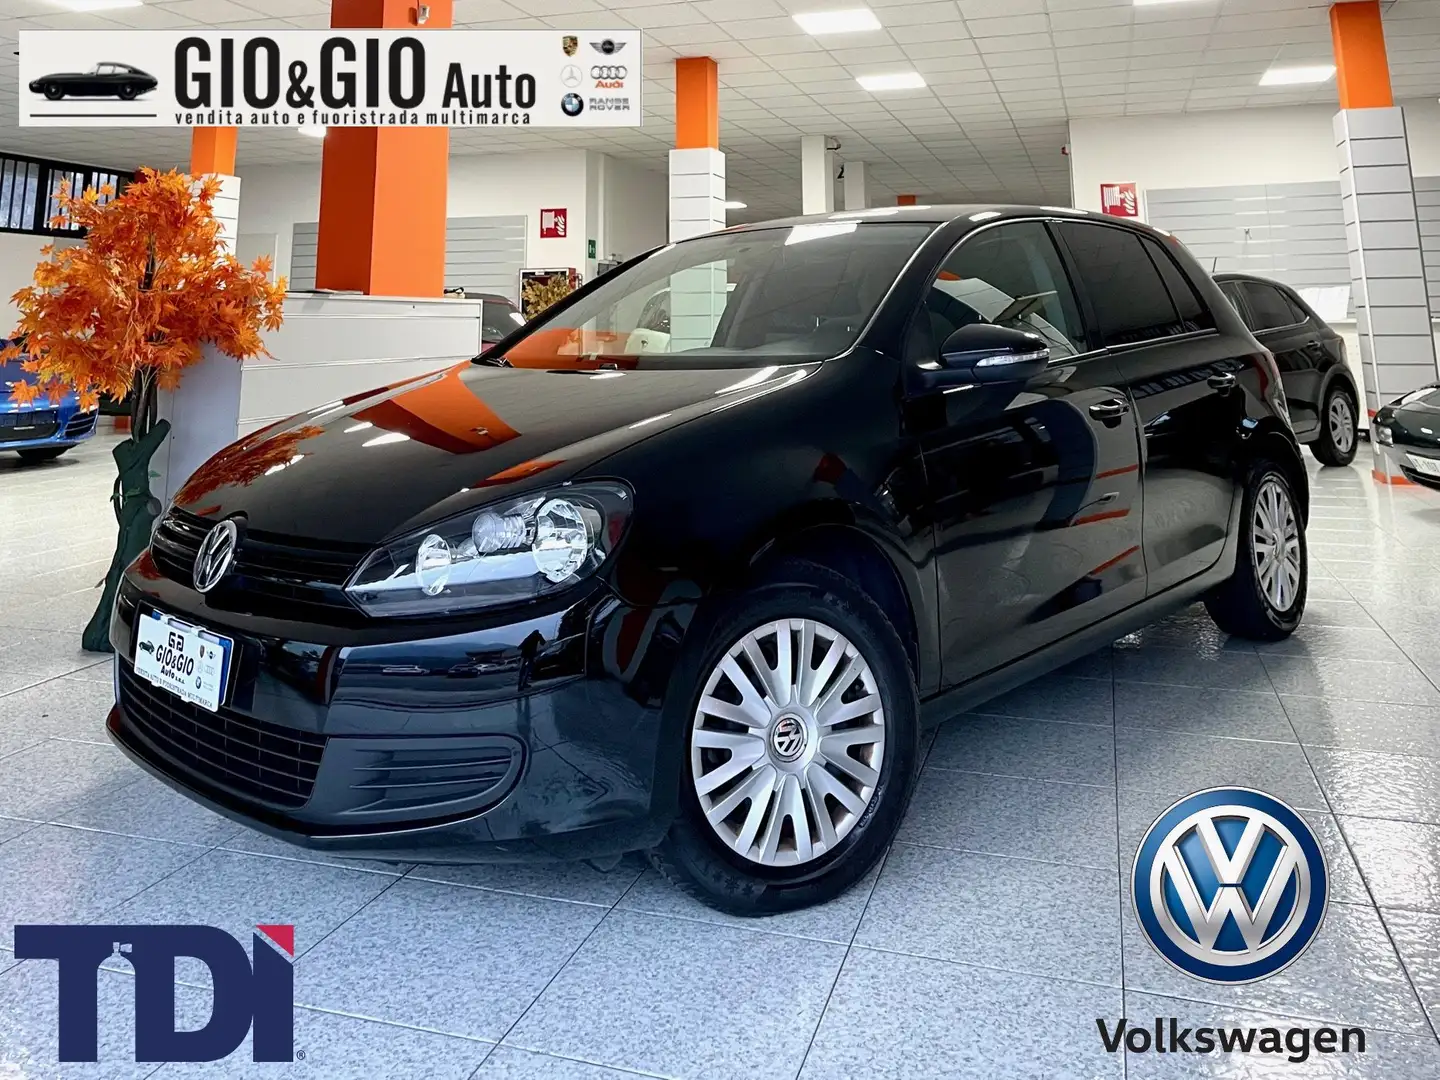 usato Volkswagen Golf Berlina a Cividate Camuno - Bs per € 8.900,-